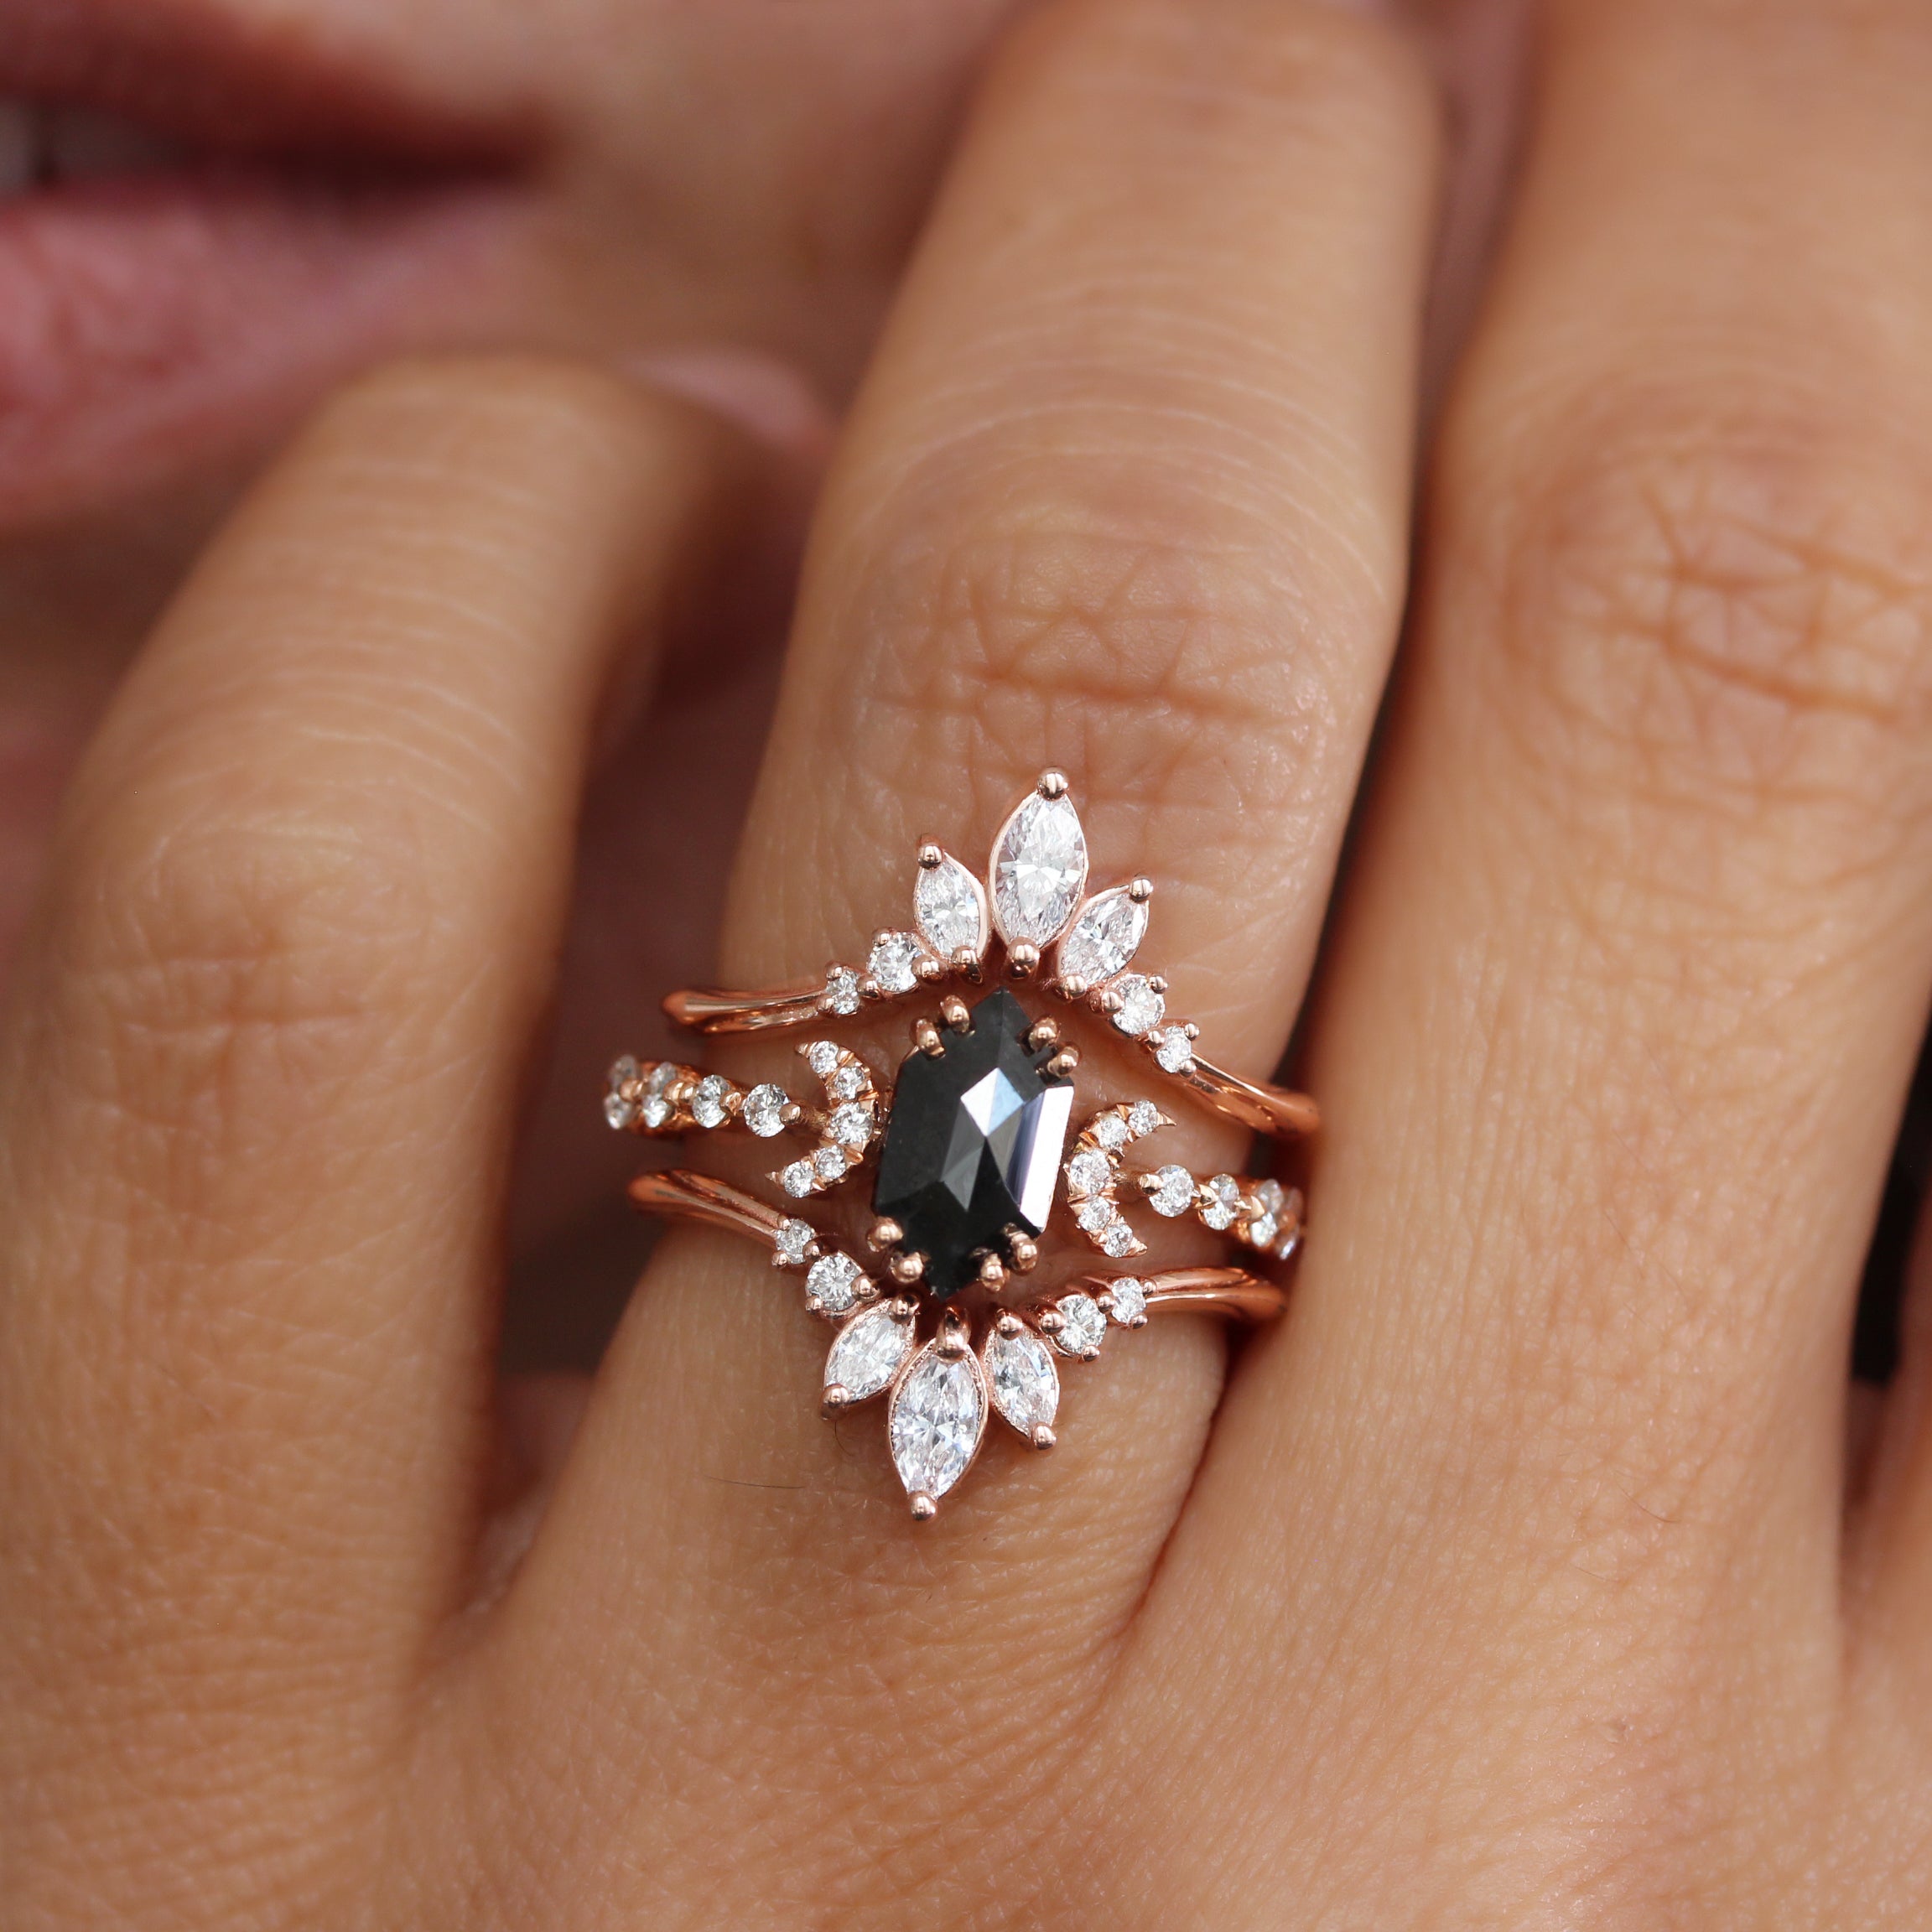 Shop Black Diamond Engagement Rings - Shiny Rock